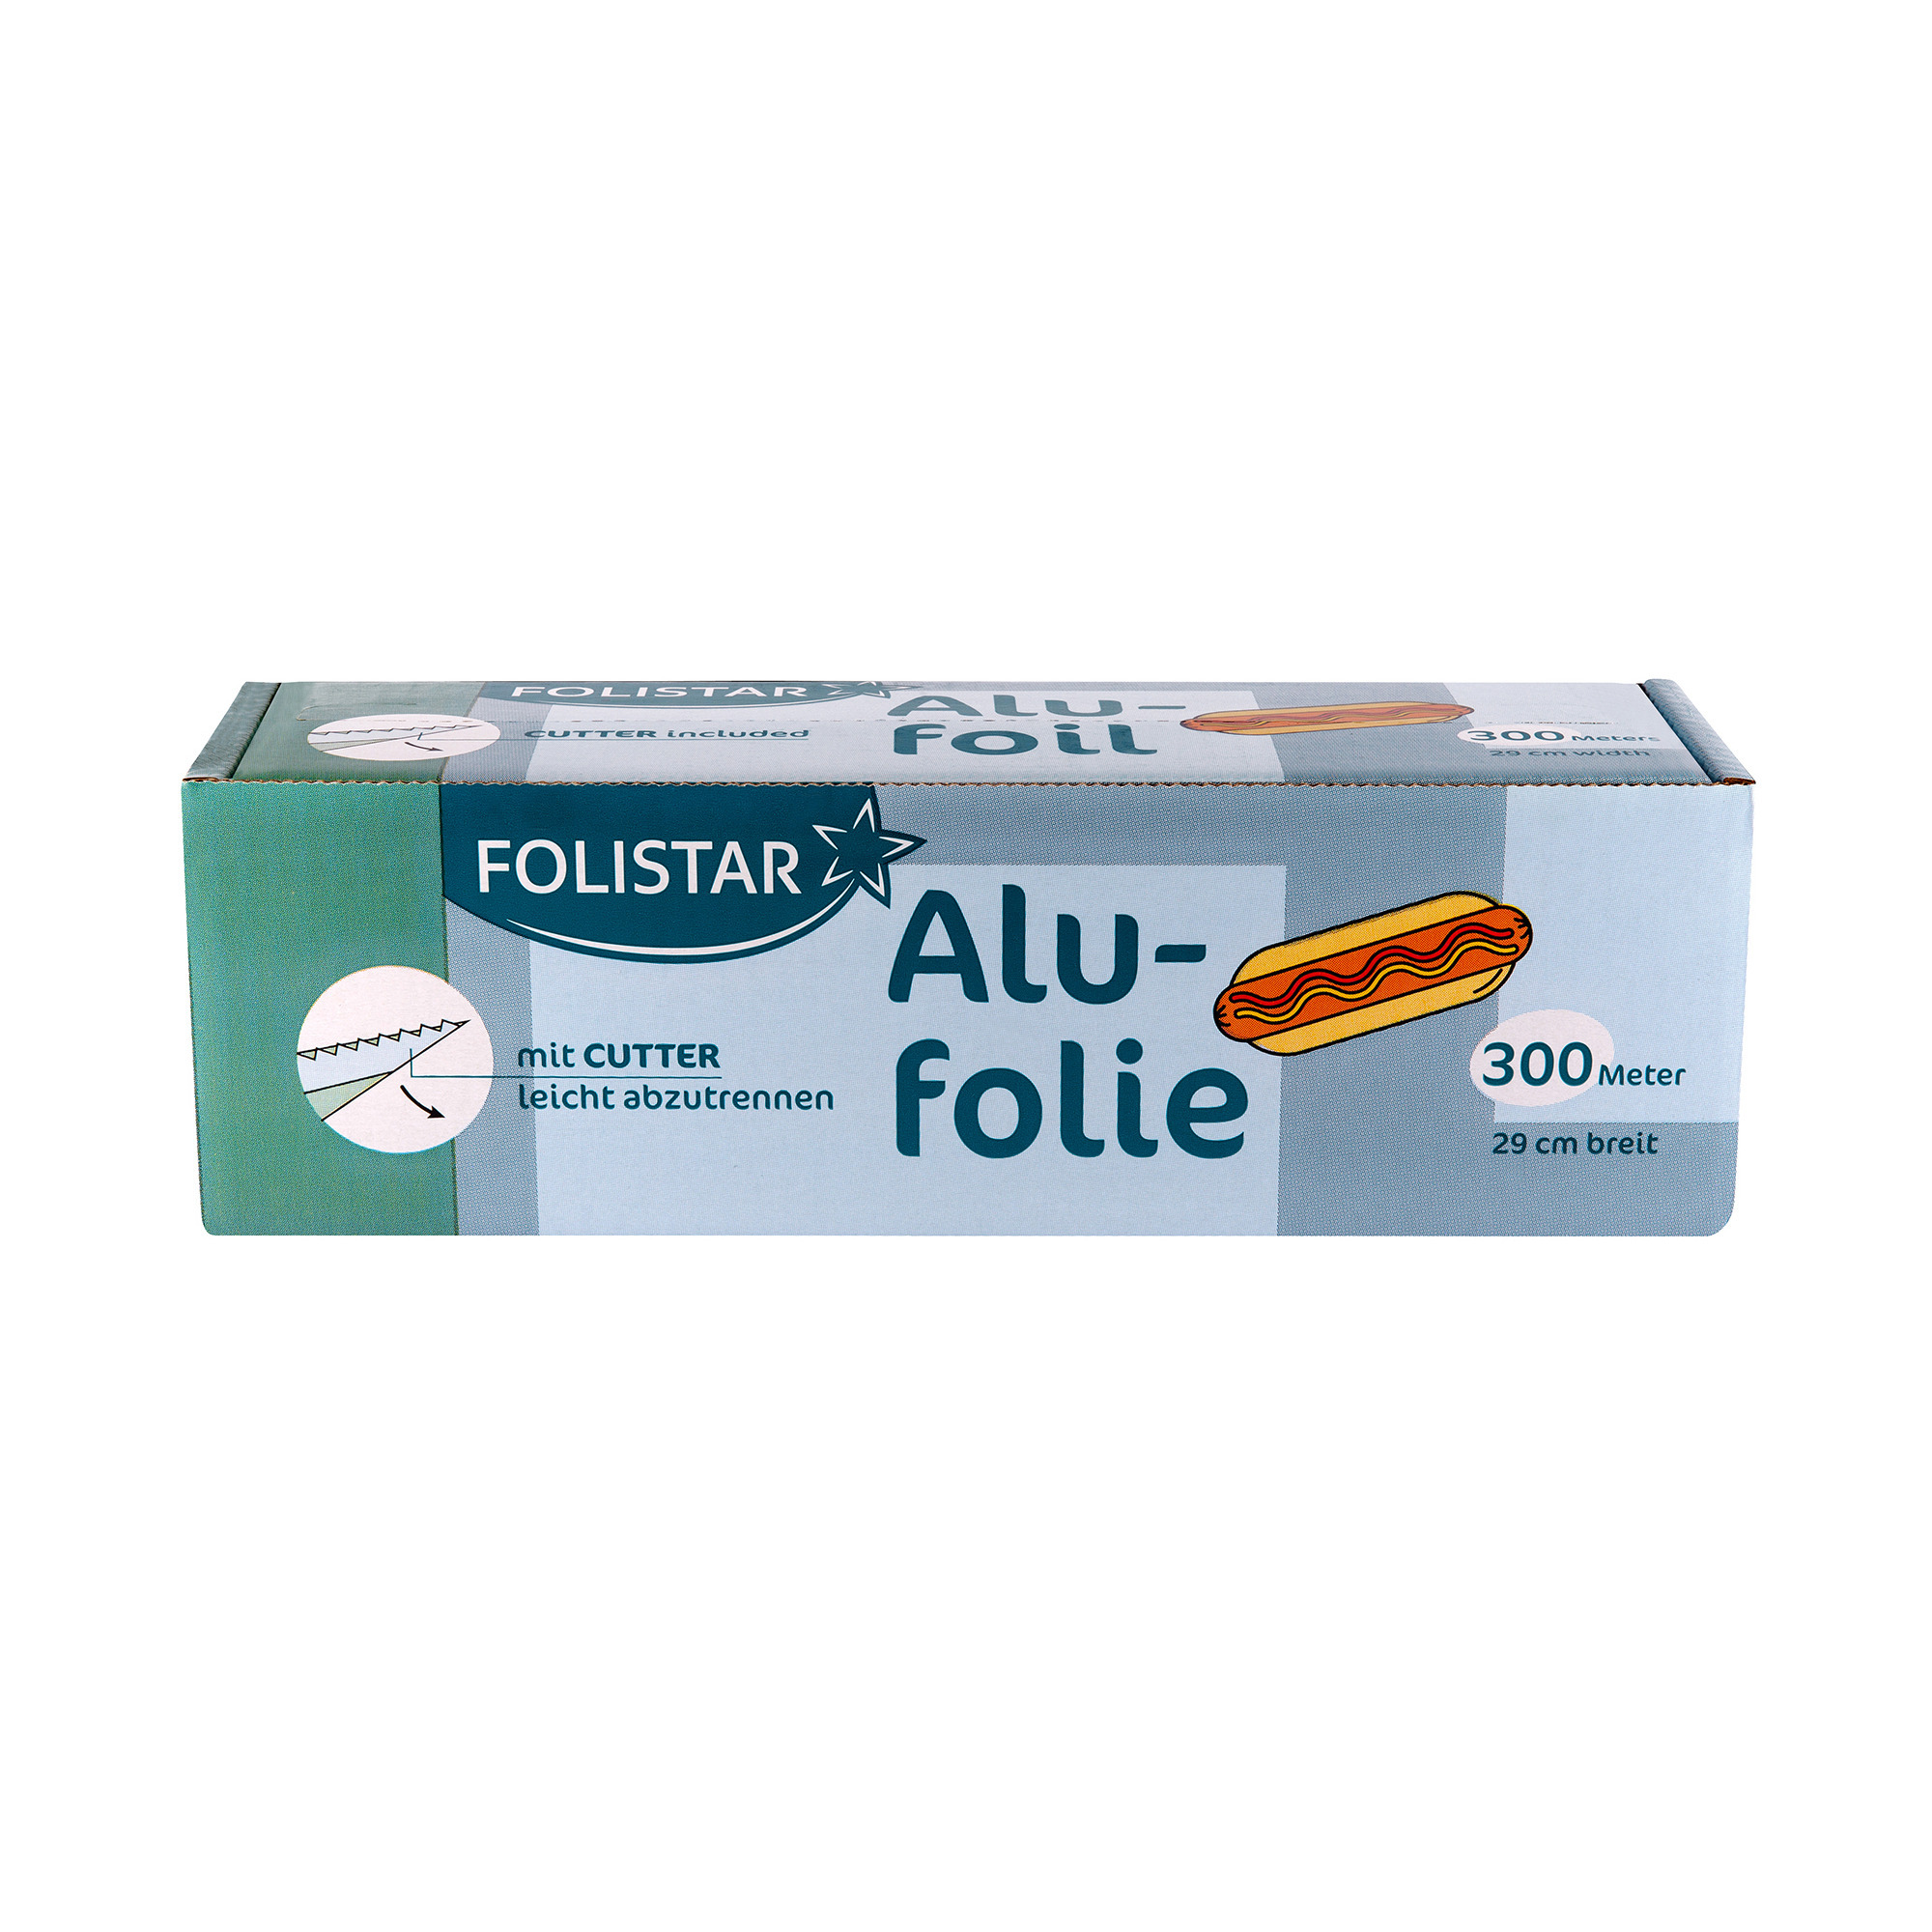 Folistar Alufolie 300mx29cm